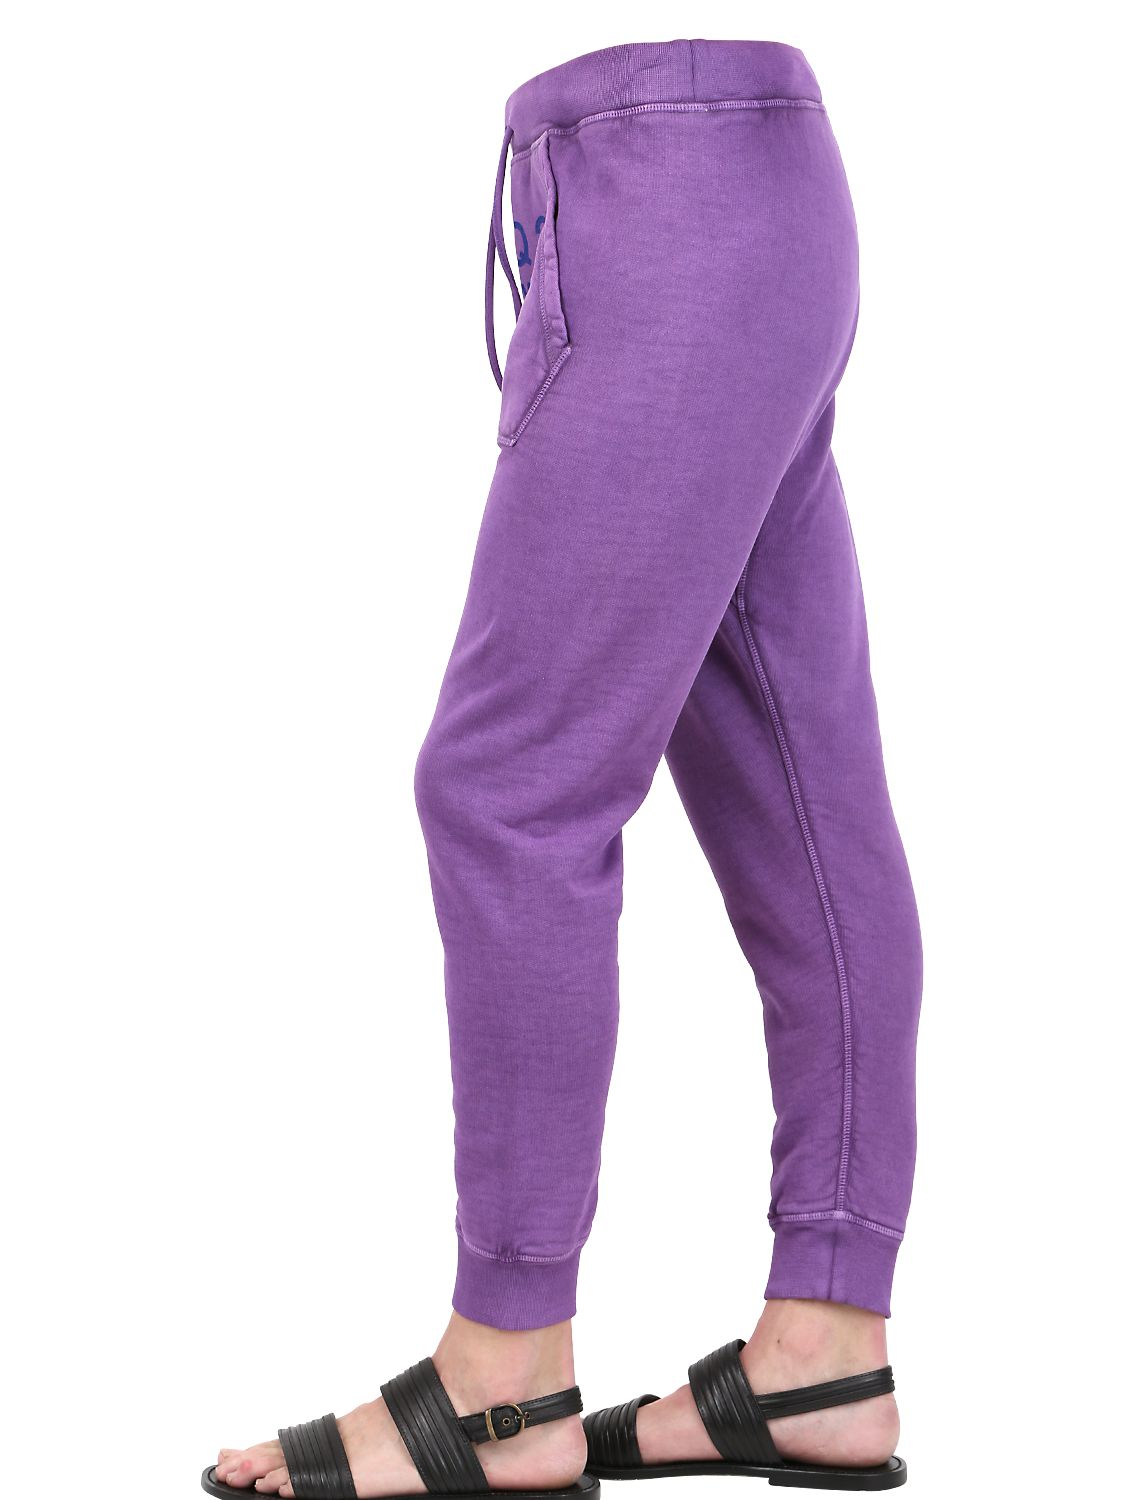 DSquared² Cotton Fleece Jogging Trousers in Violet (Purple) for Men - Lyst